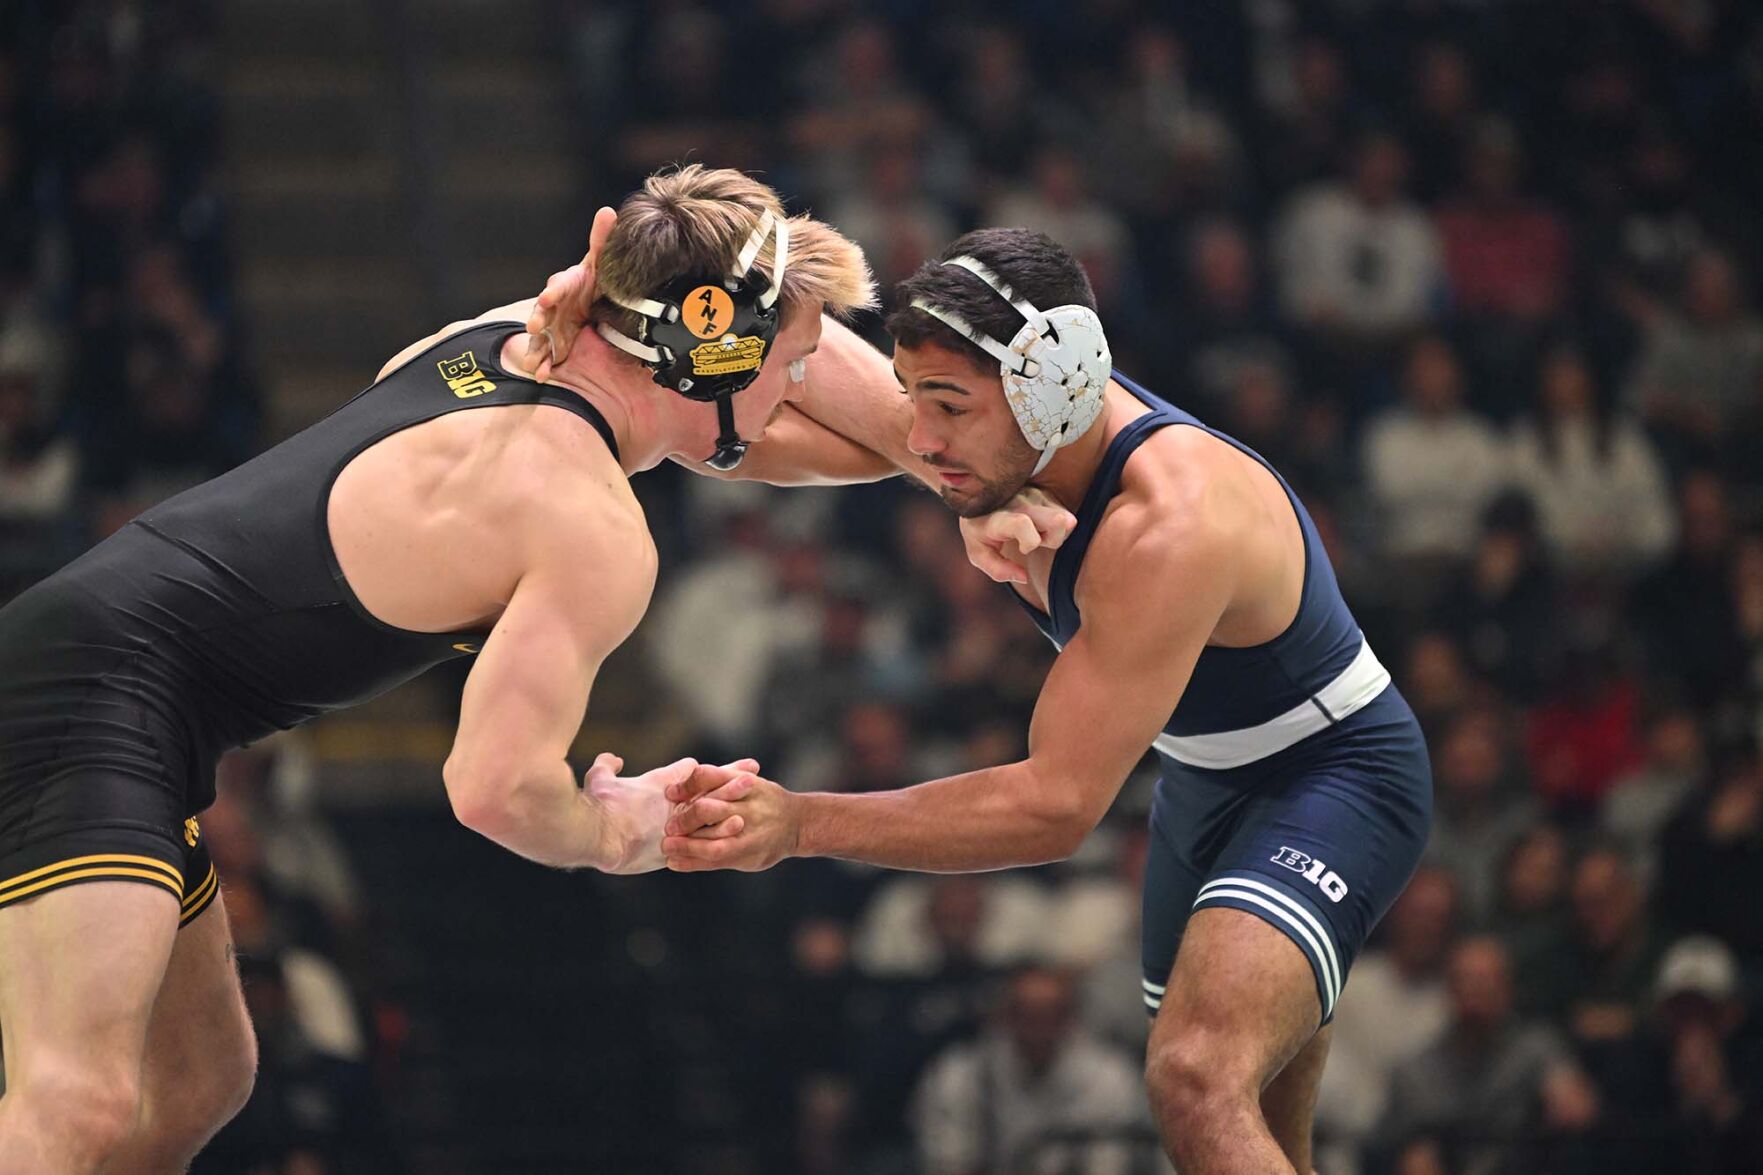 NCAA wrestling Iowas Murin advances to quarterfinals, will face three-time champion Sports tribdem photo pic